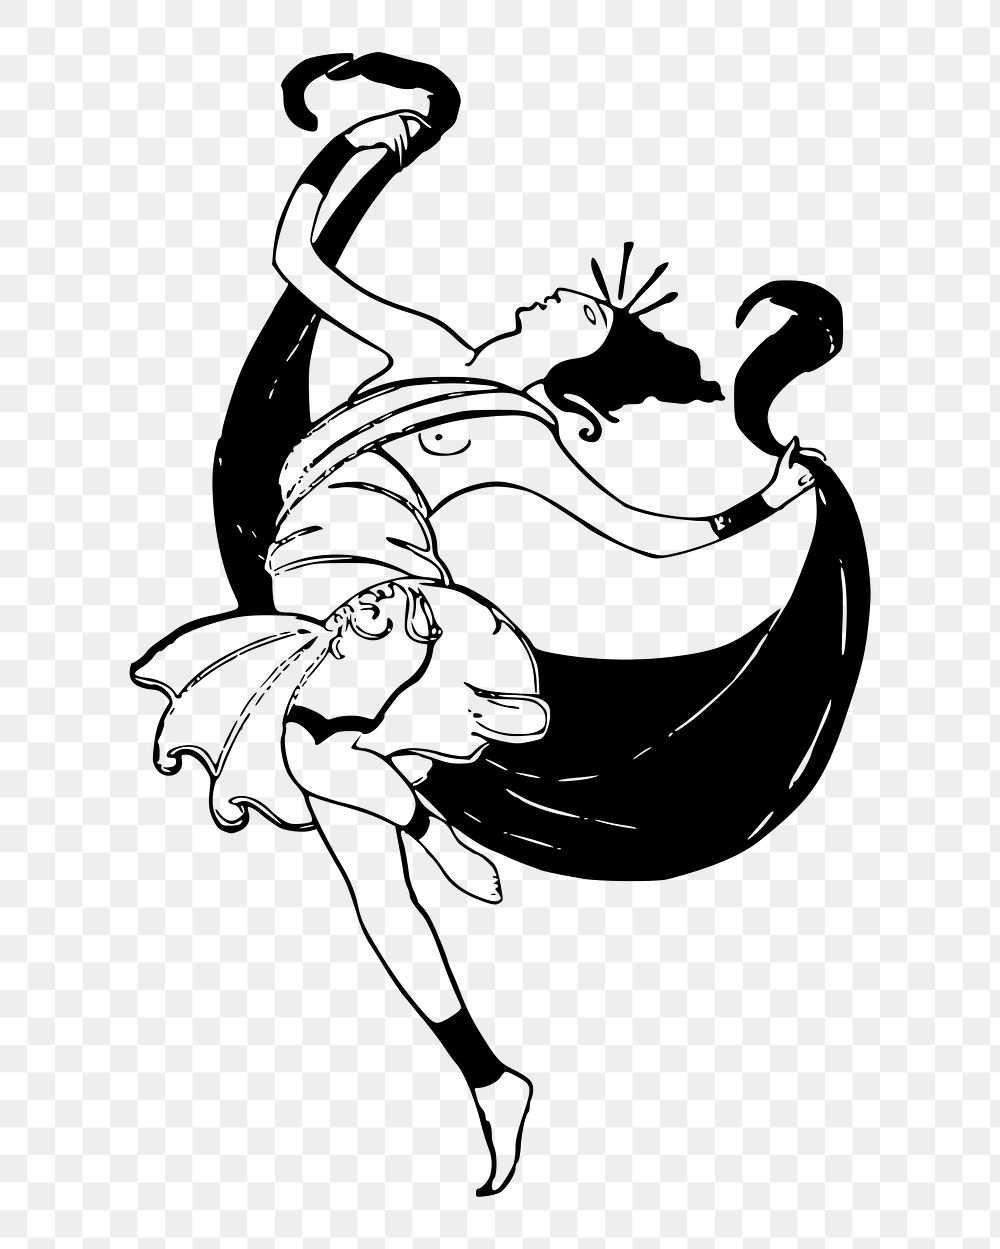 Dancing woman png sticker, transparent background. Free public domain CC0 image.